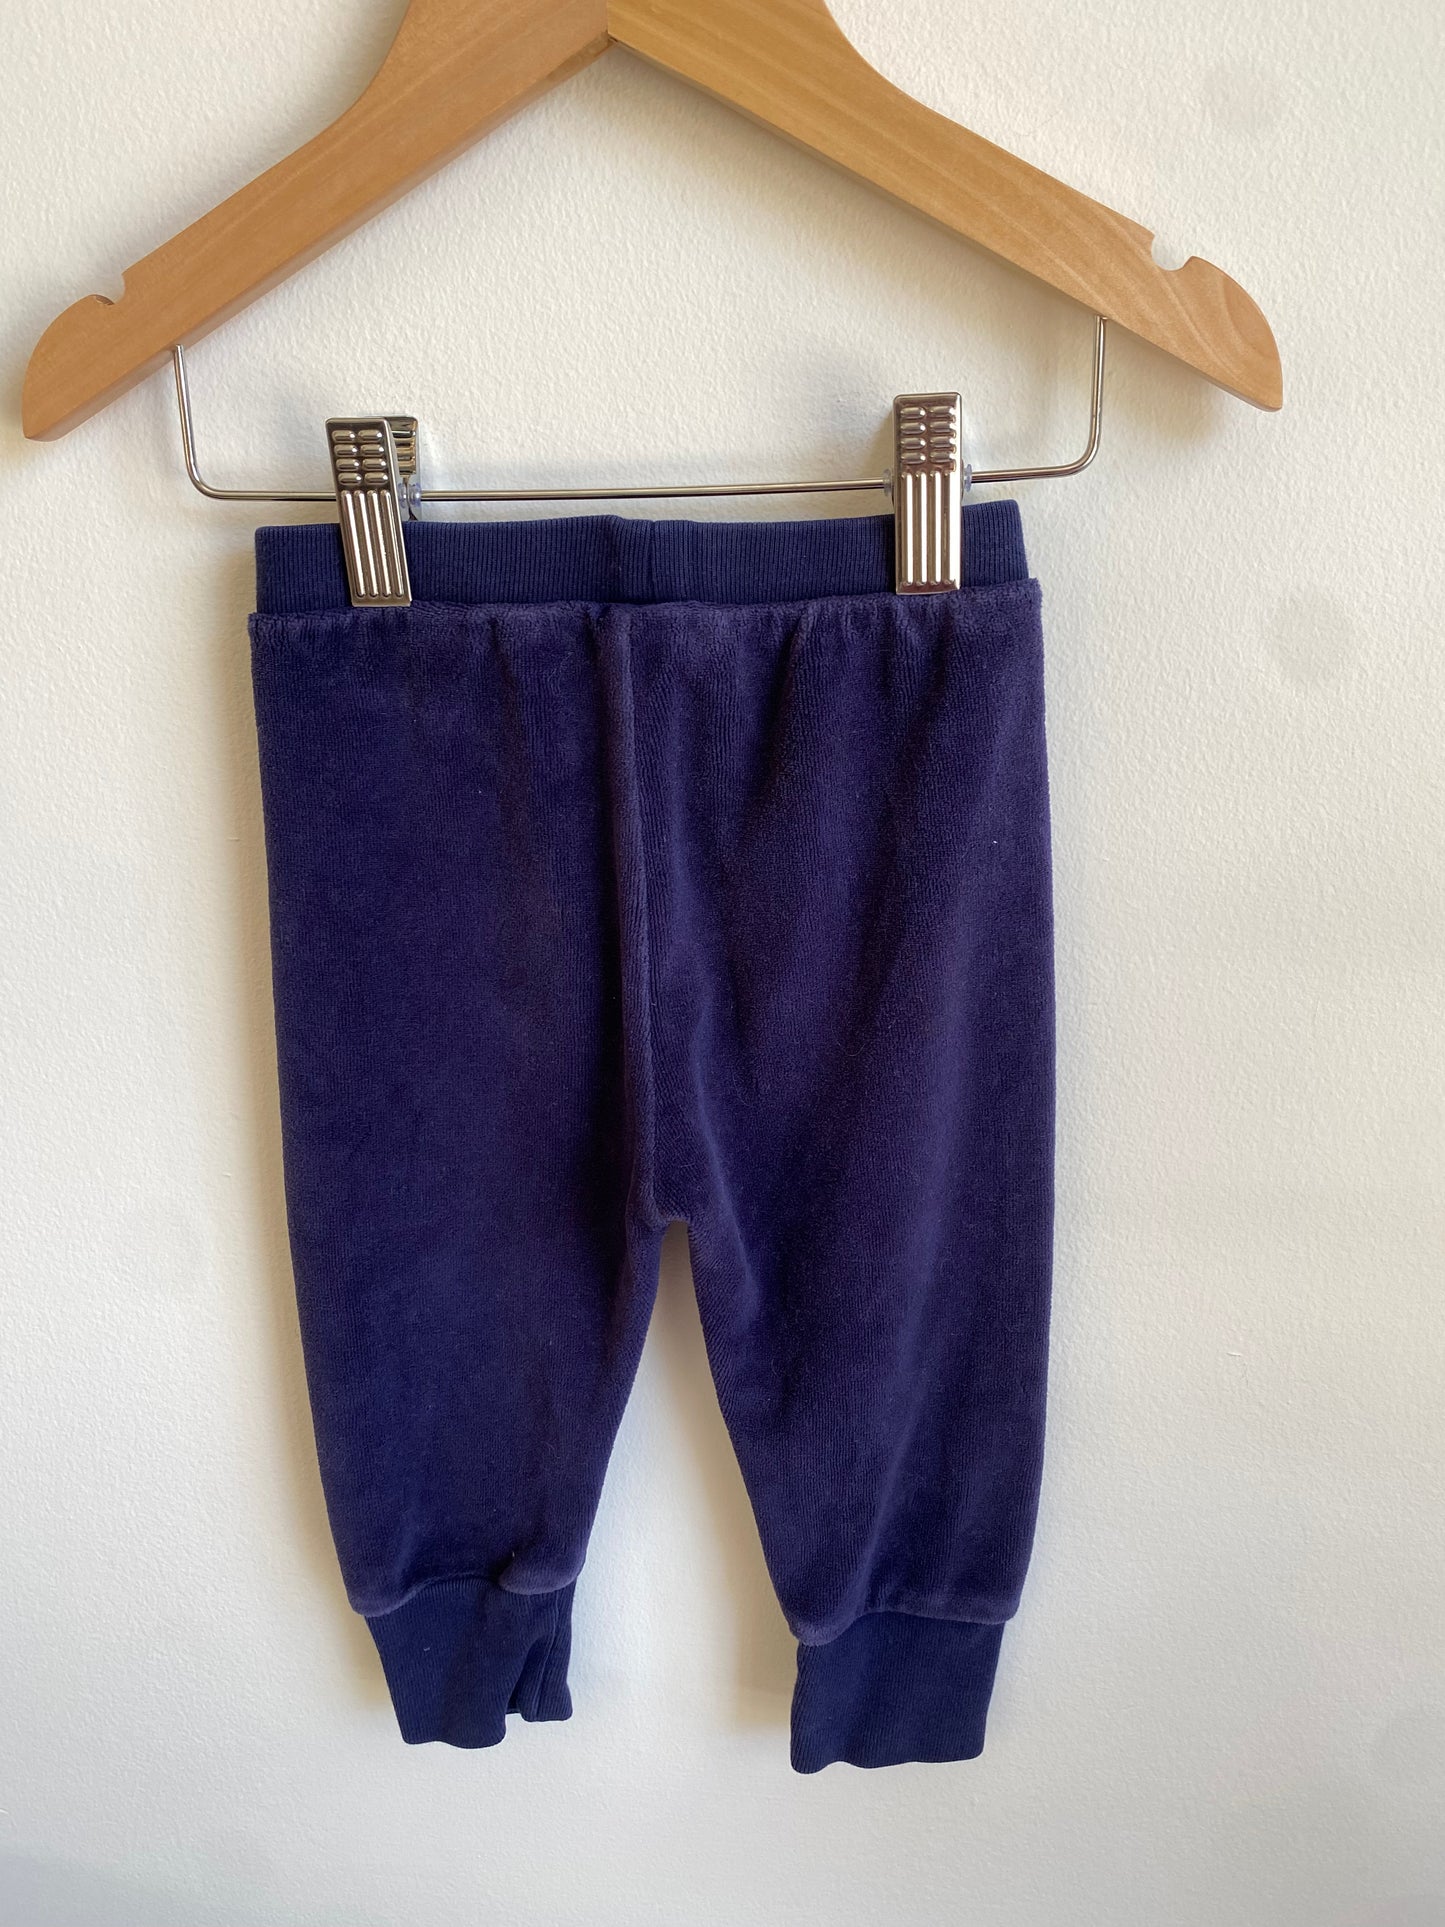 Soft Royal Blue Pants / 18-24m